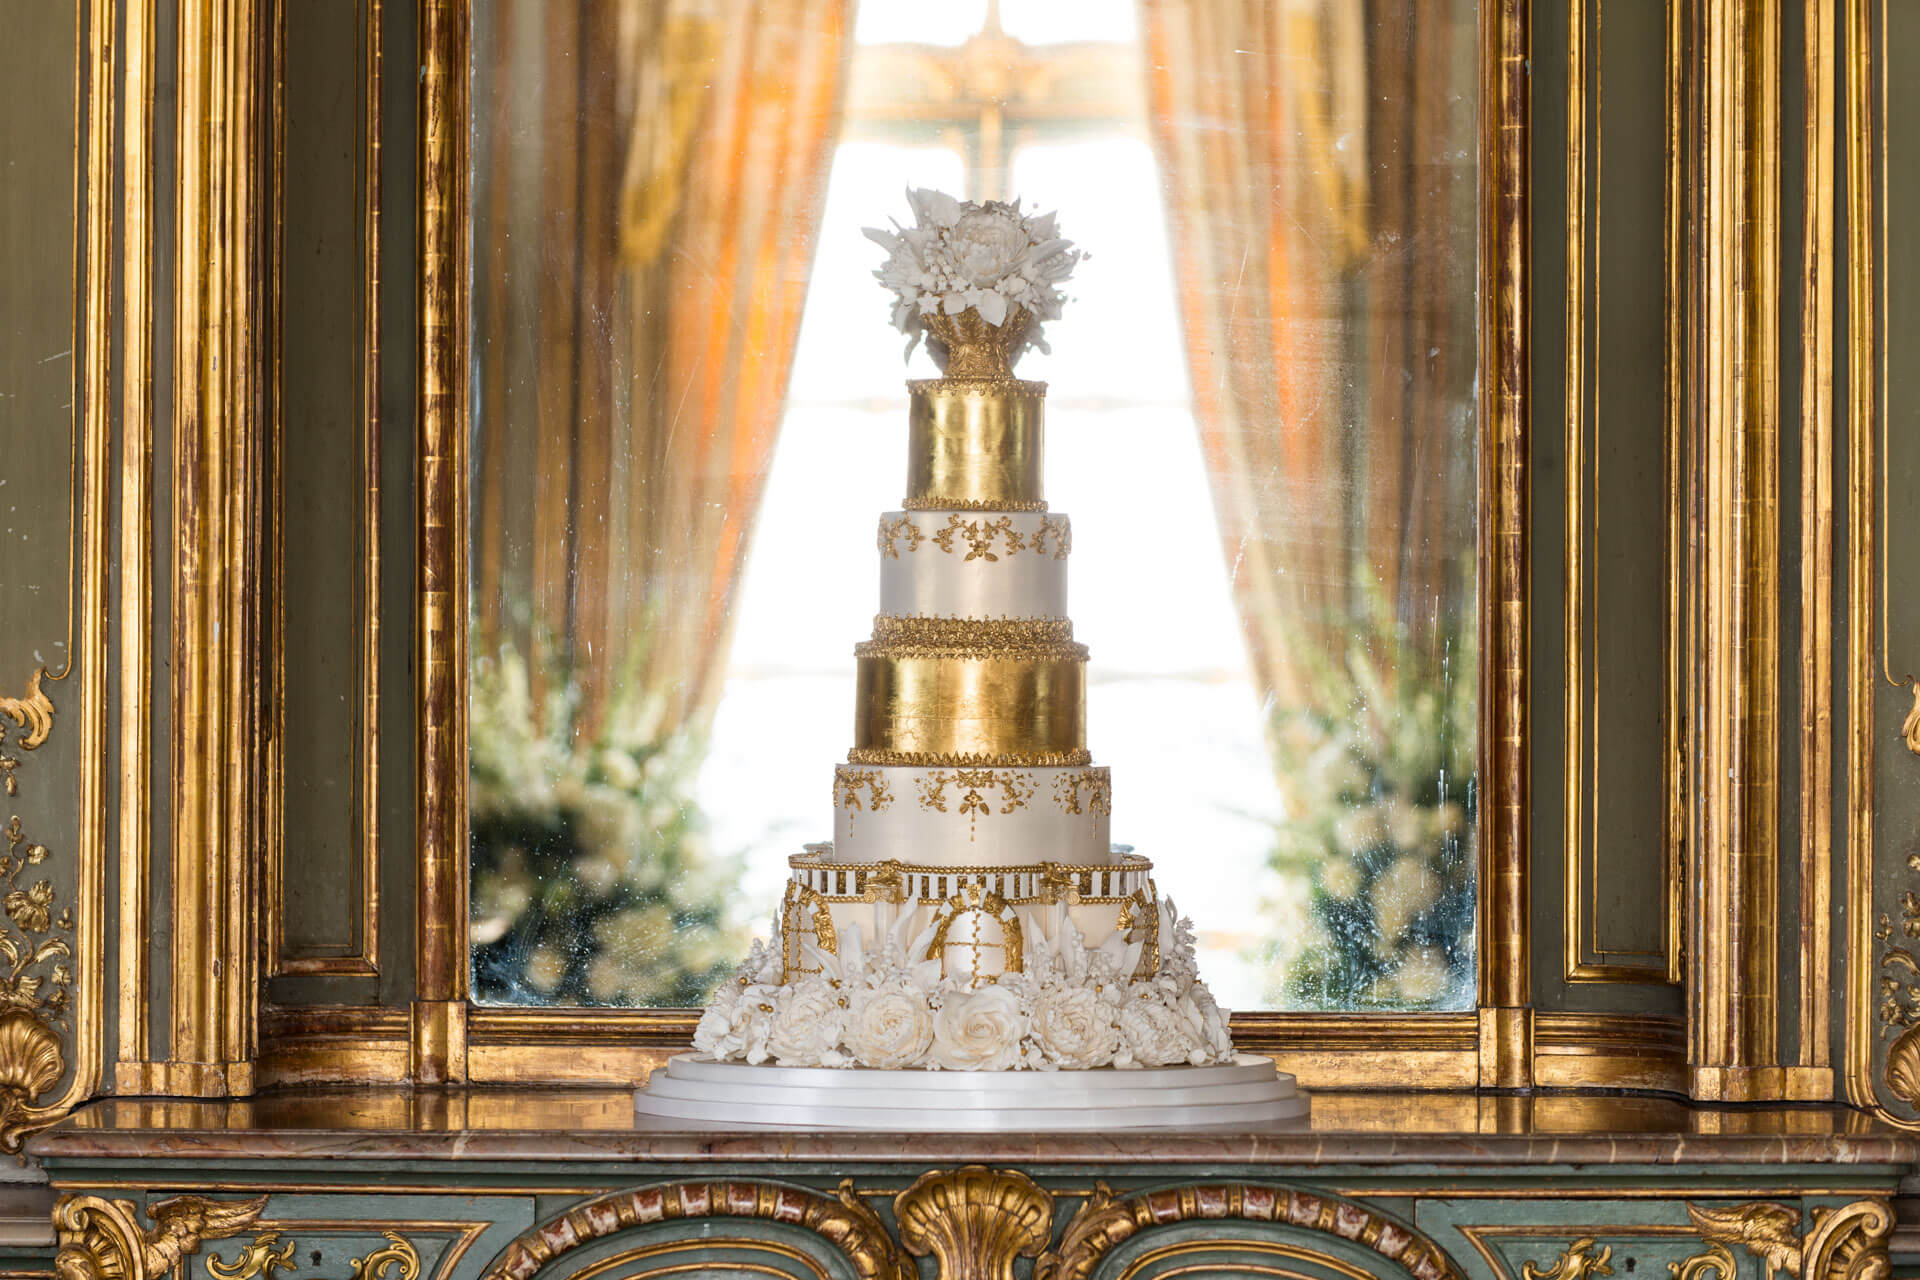 Cliveden stunning custom wedding cake By Yevnig London